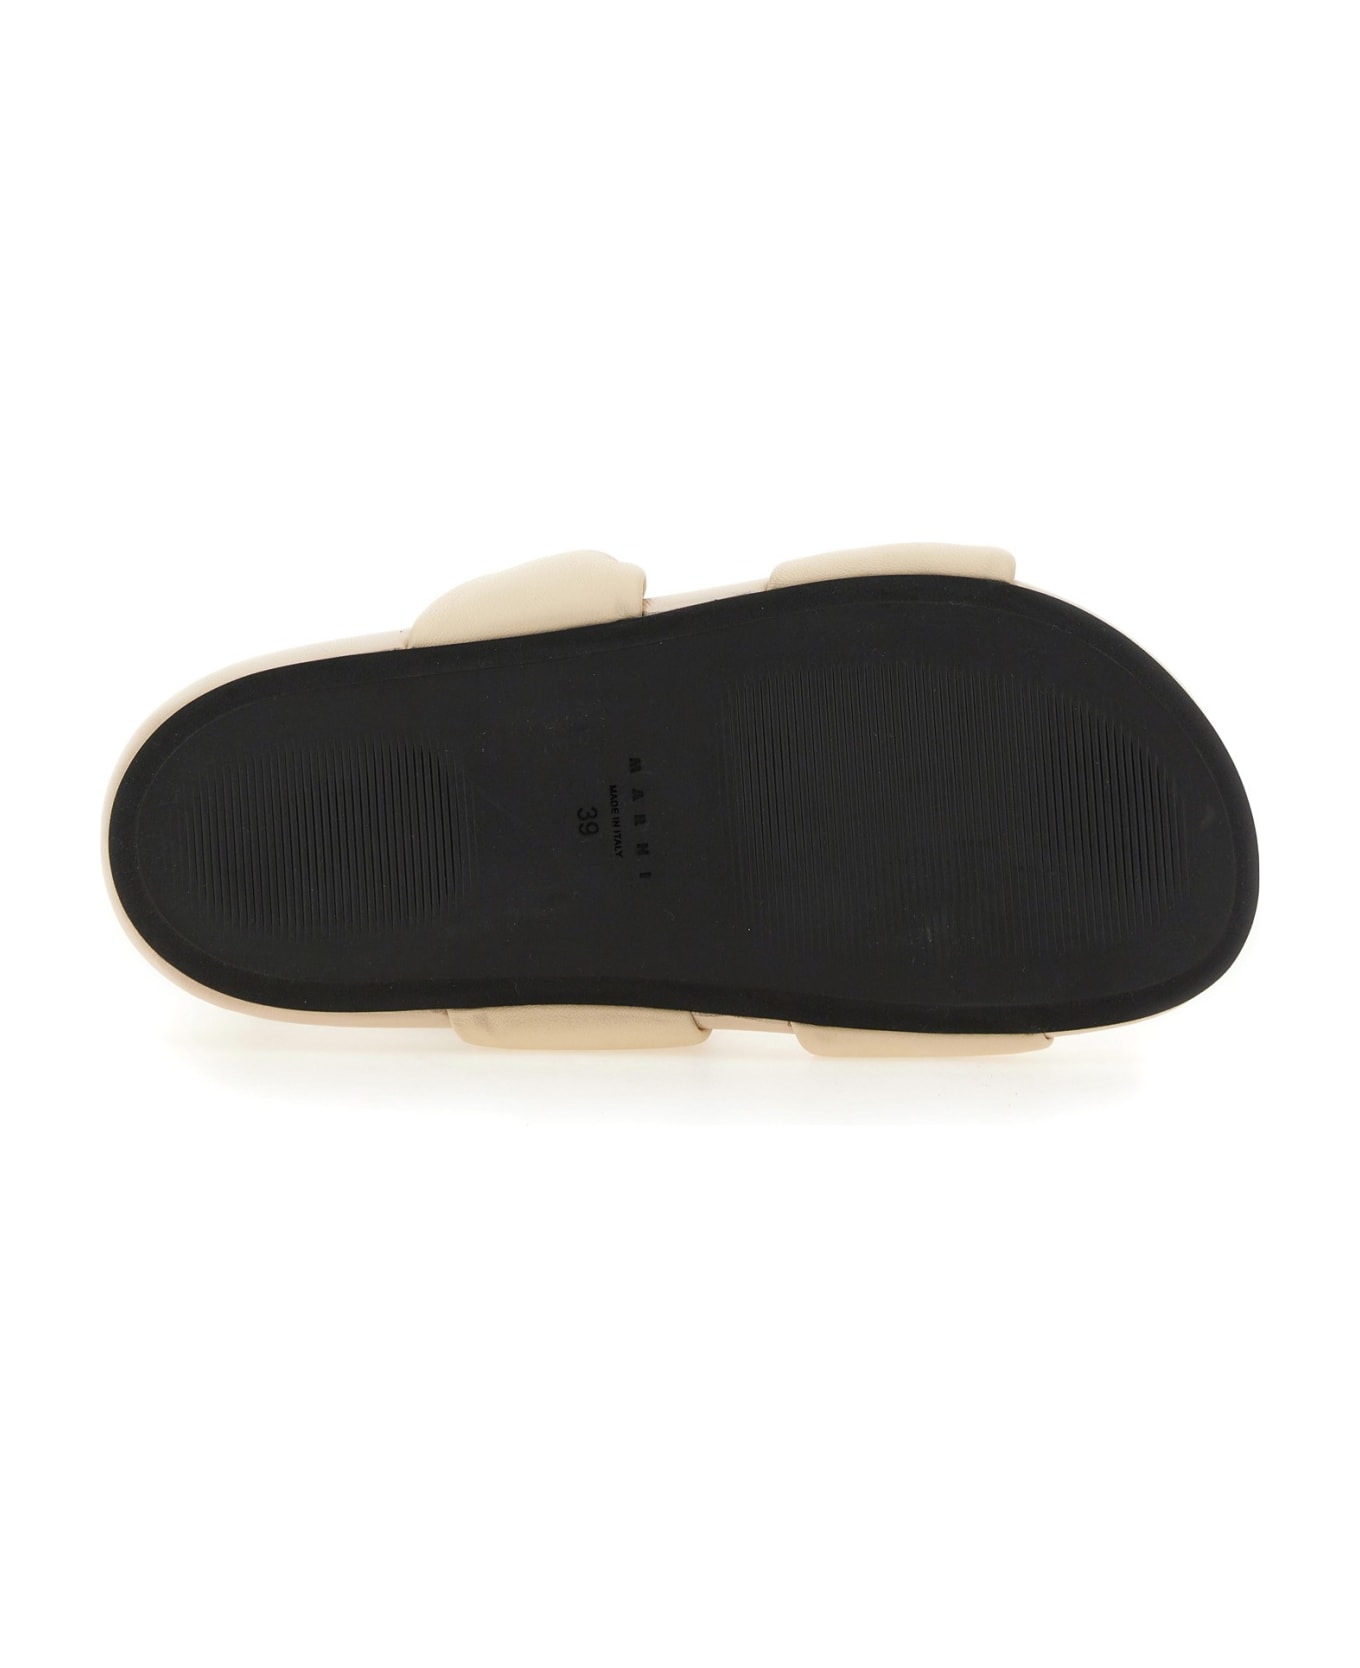 Marni Leather Sandal - AVORIO